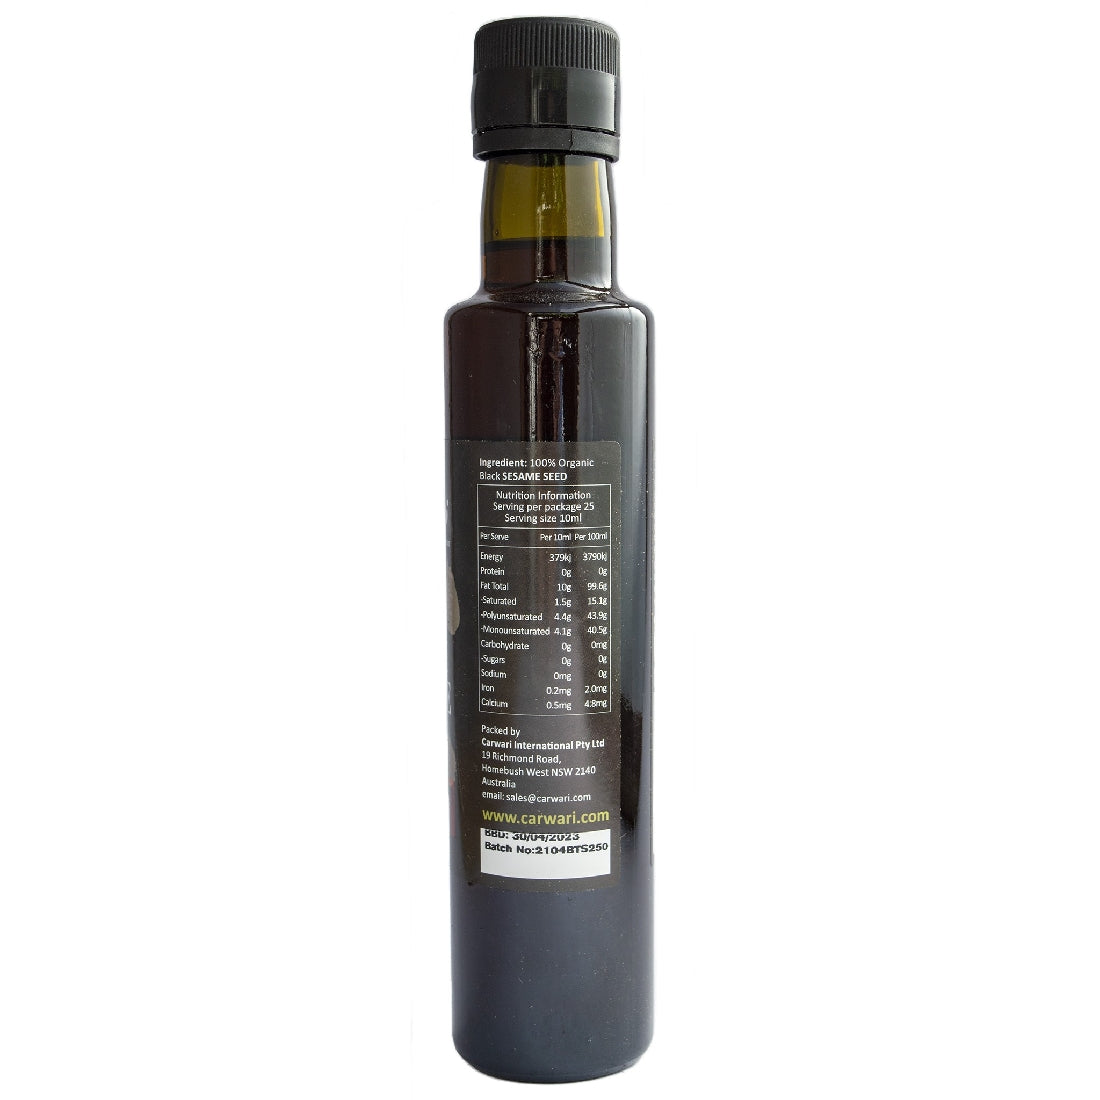 CARWARI TOASTED BLACK SESAME OIL - 250ML ORGANIC COLD PRESSED